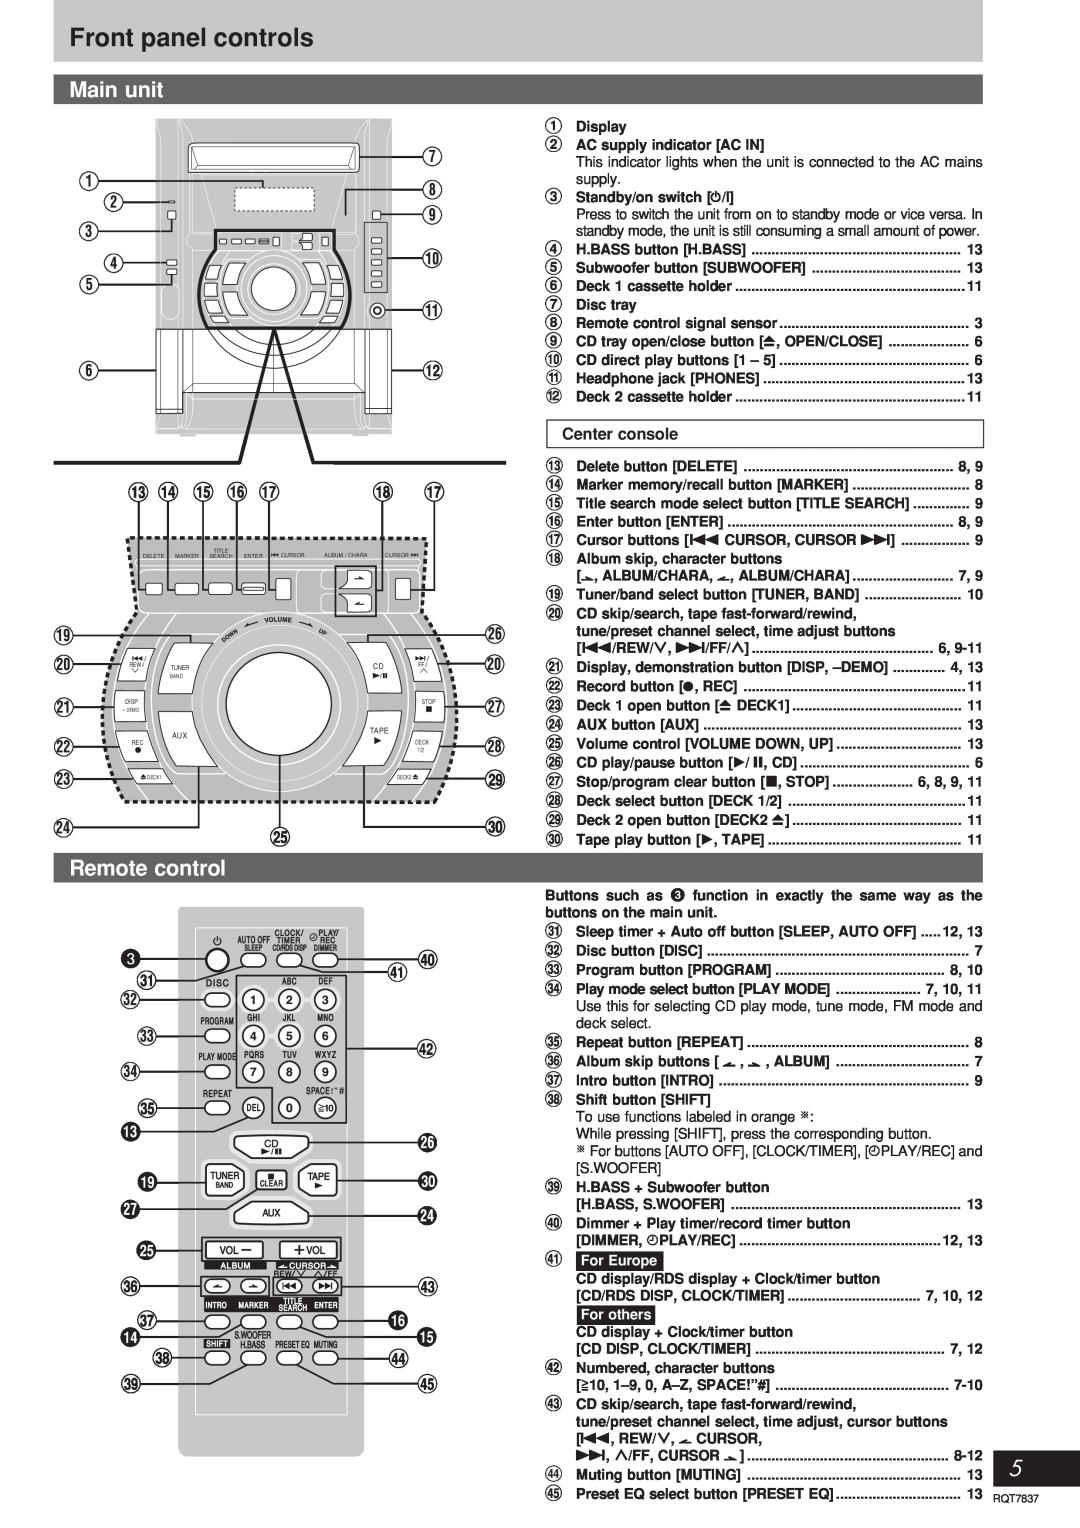 Panasonic SC-AK630 specifications Front panel controls, Main unit, Remote control 